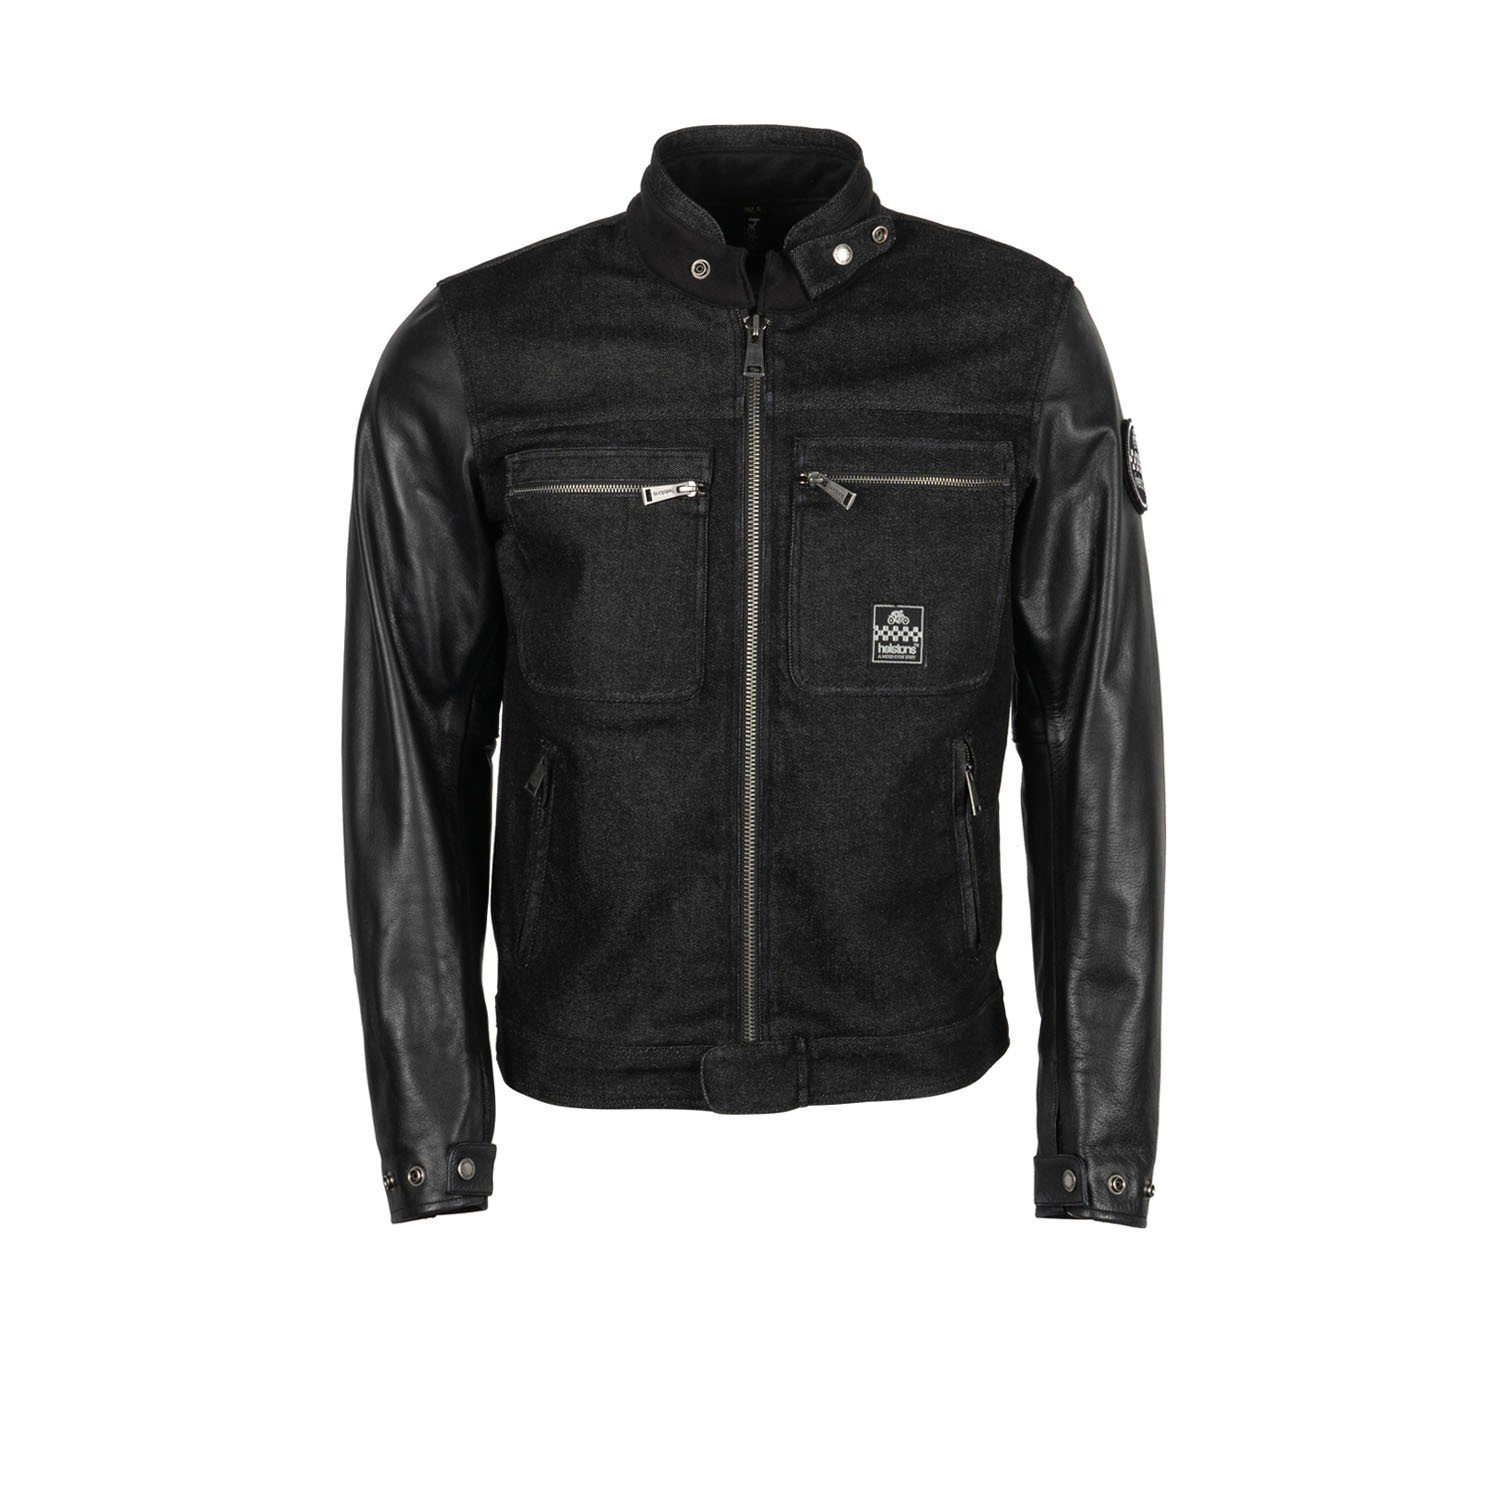 Image of Helstons Winston Canvas Cotton Leather Jacket Black Size XL ID 3662136084070